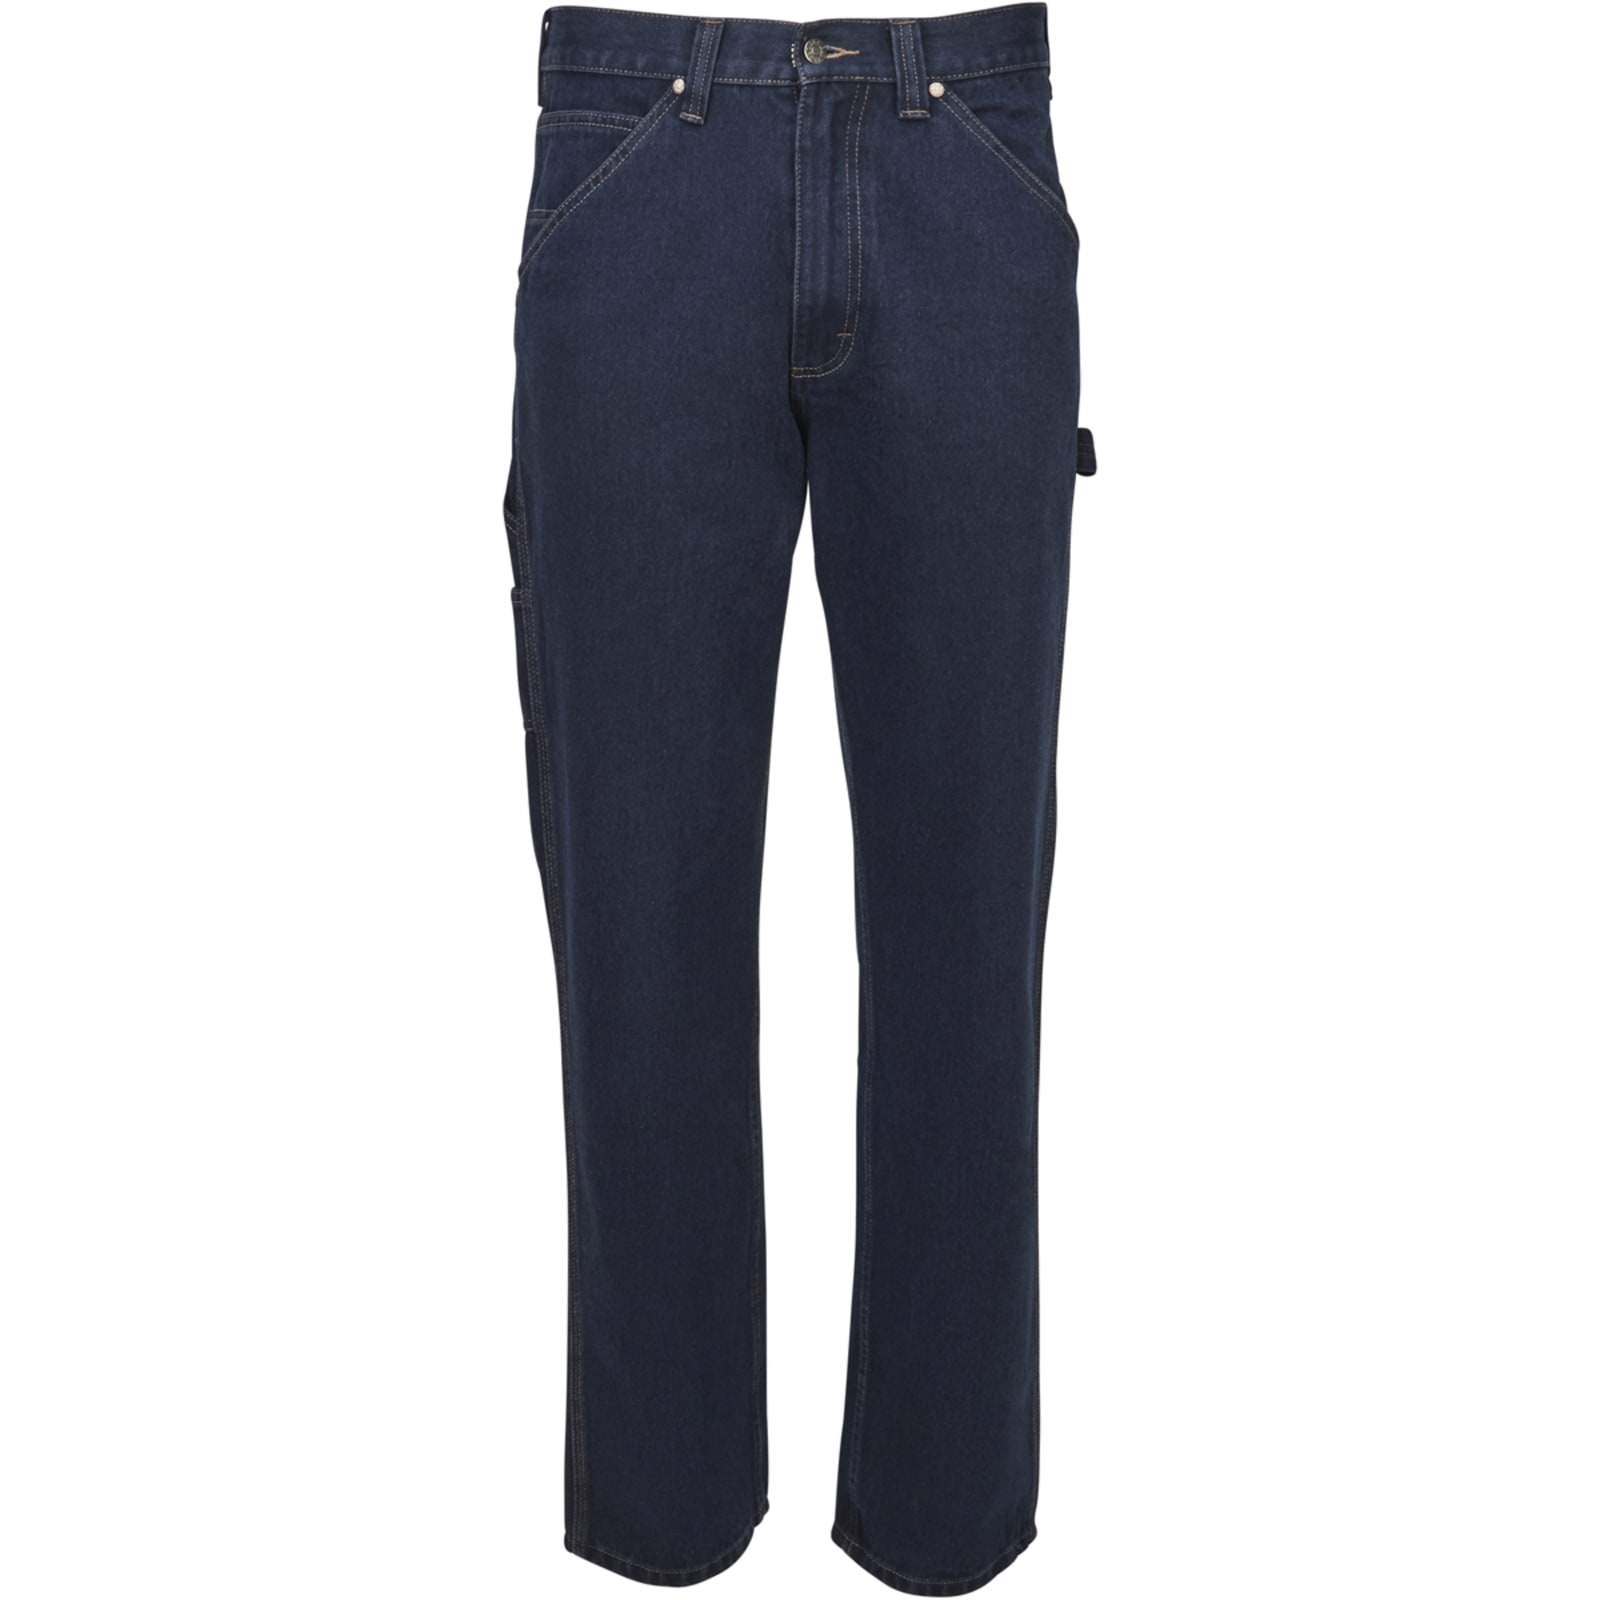 Men's Blue Denim Carpenter Jeans by Field & Forest at Fleet Farm